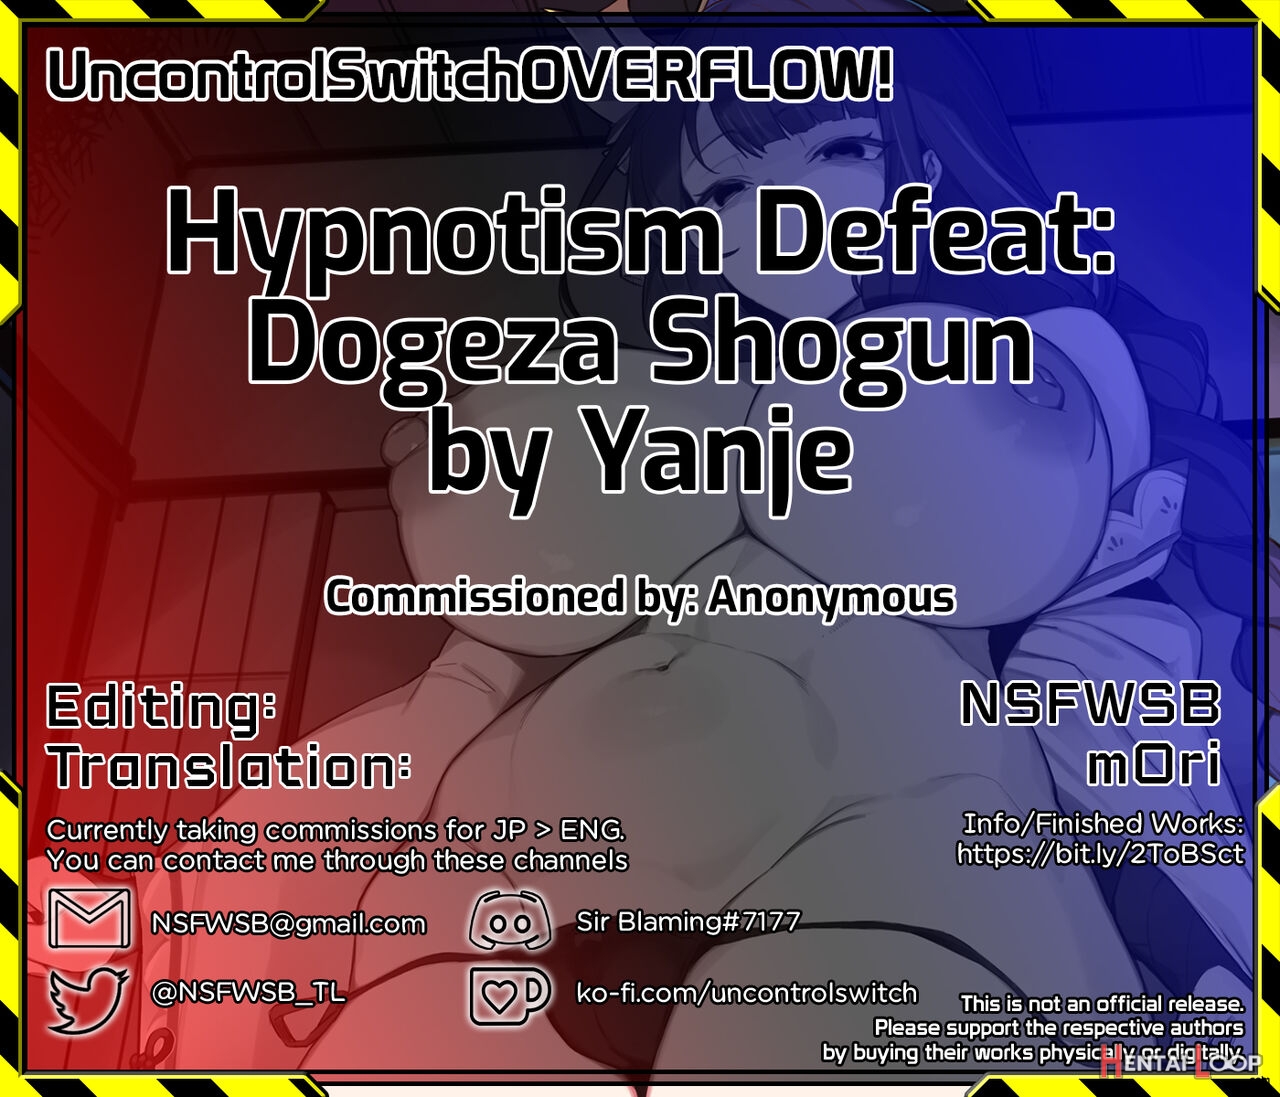 Hypnotism Defeat: Dogeza Shogun page 6